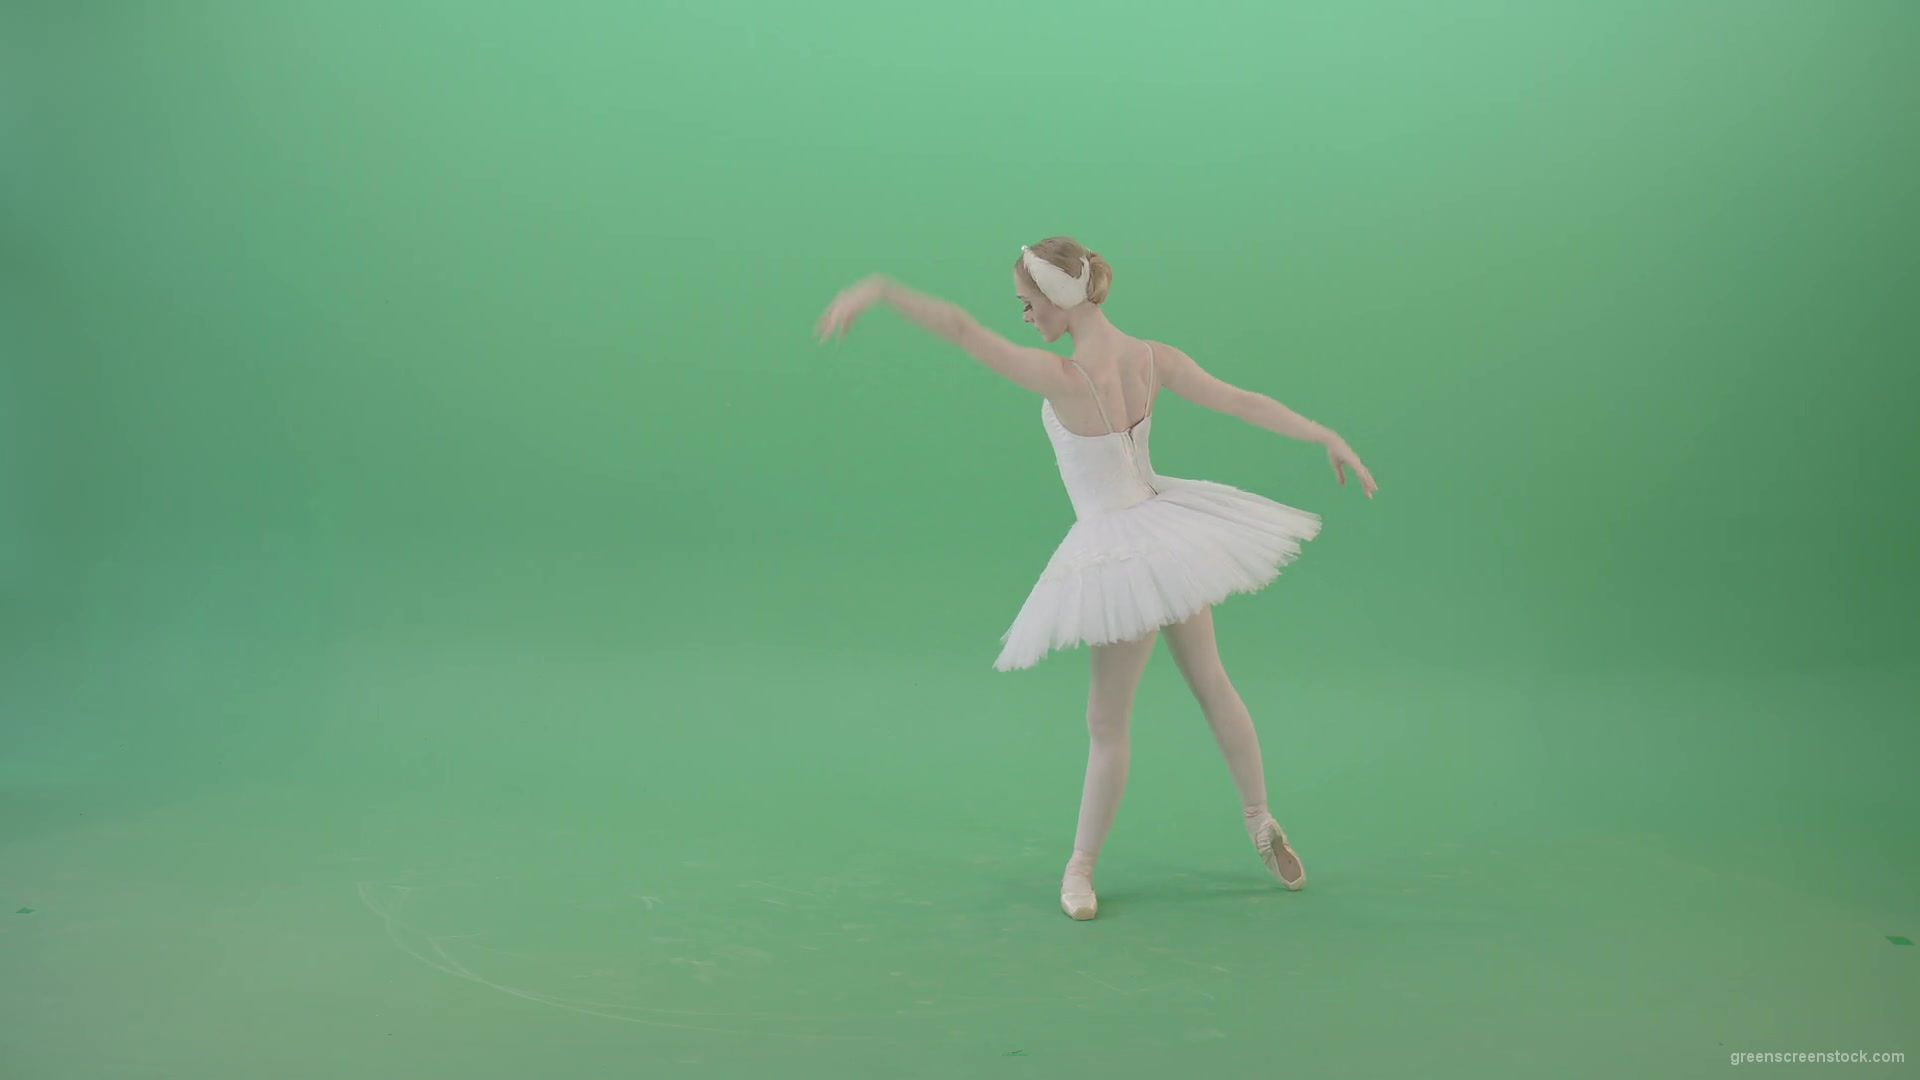 Elegant-snowwhite-ballet-dancer-ballerina-dancing-isolated-on-Green-Screen-4K-Video-Footage-1920_004 Green Screen Stock